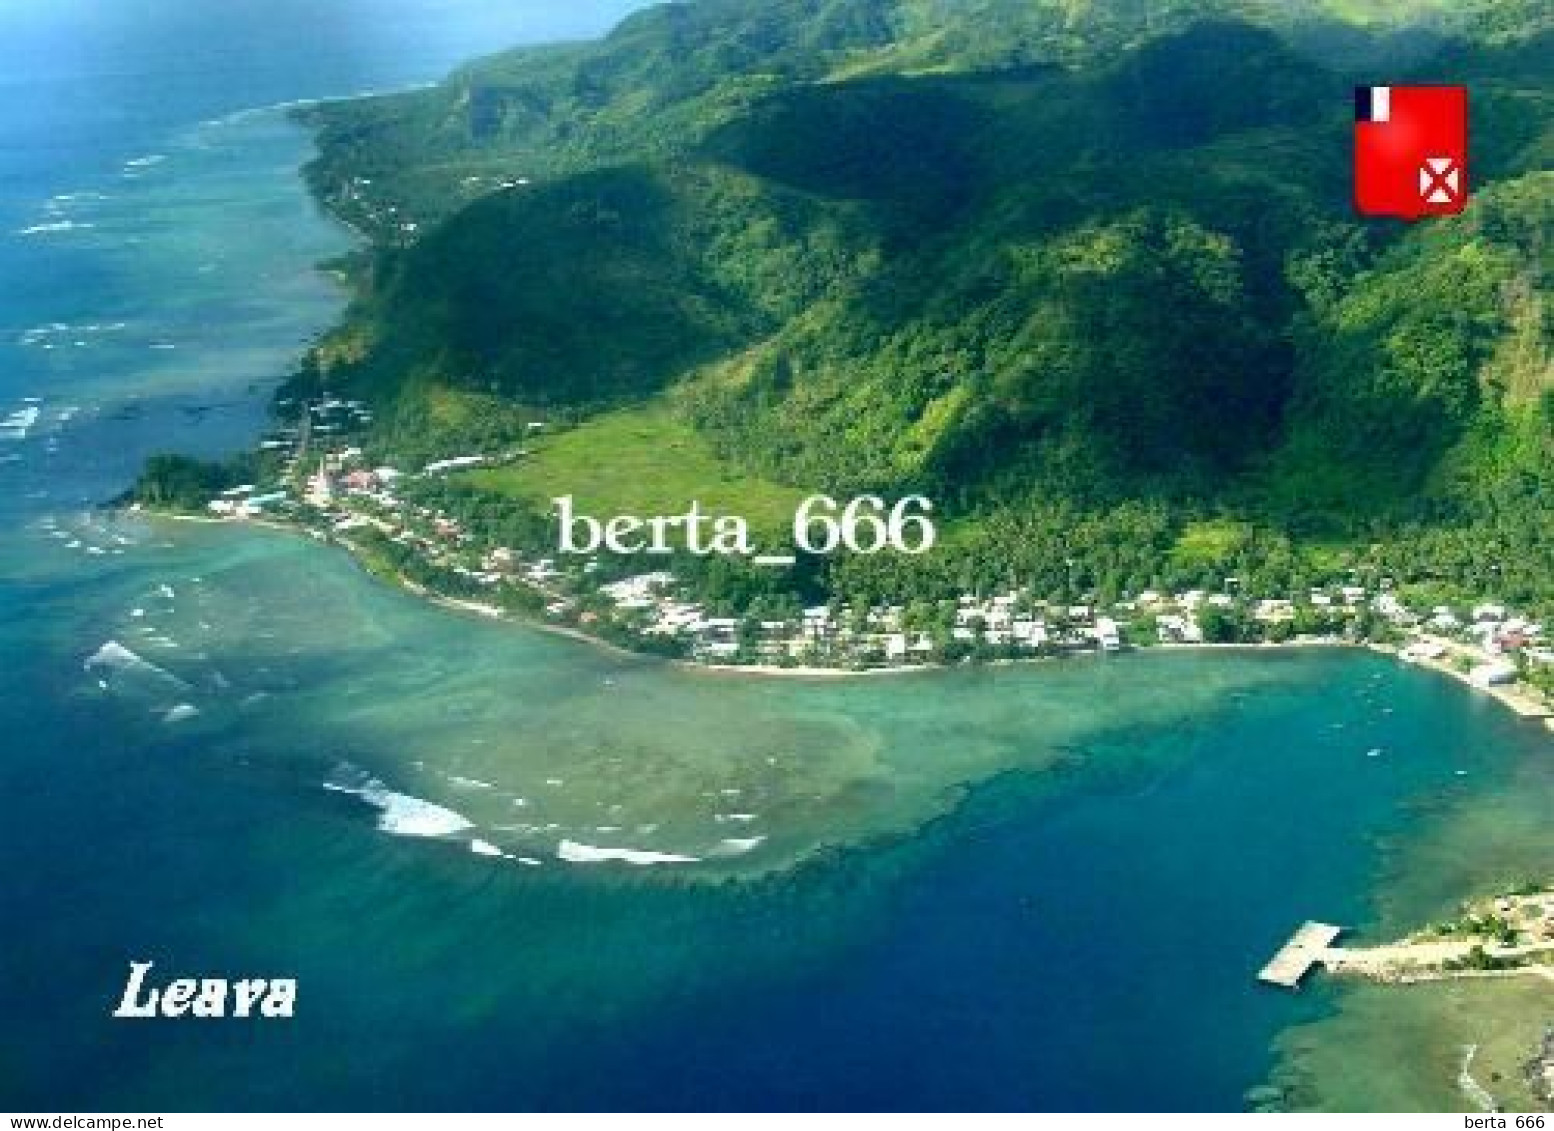 Wallis And Futuna Leava Aerial View New Postcard - Wallis And Futuna